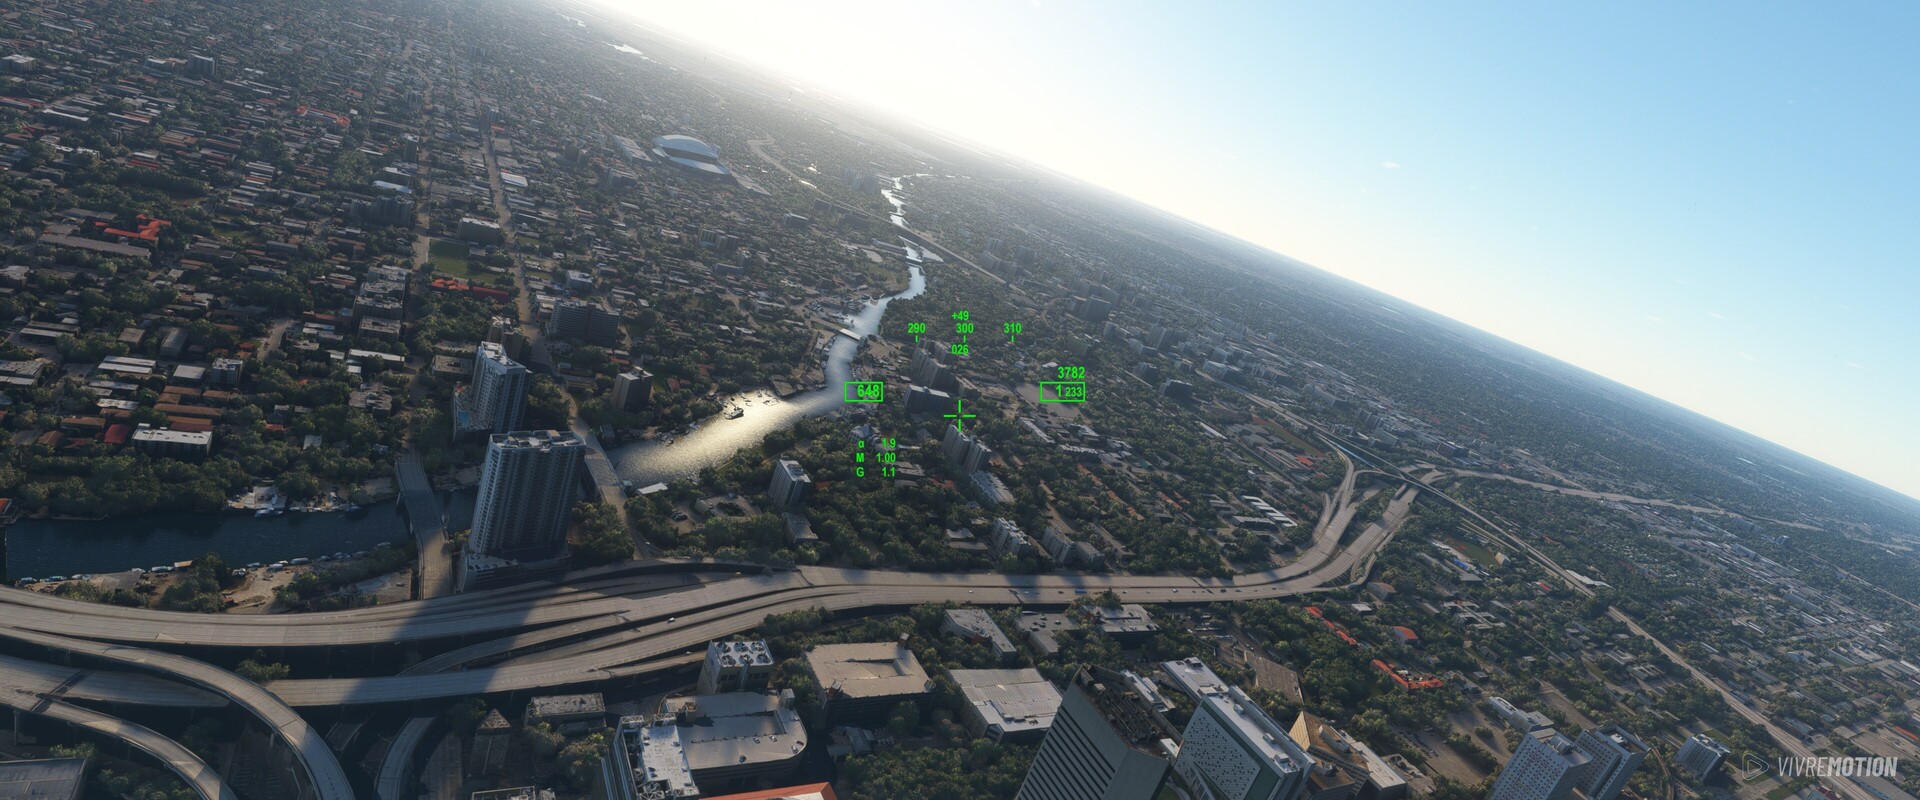 Miami, Florida - Boeing F/A-18 Super Hornet - Microsoft Flight Simulator - VIVRE-MOTION